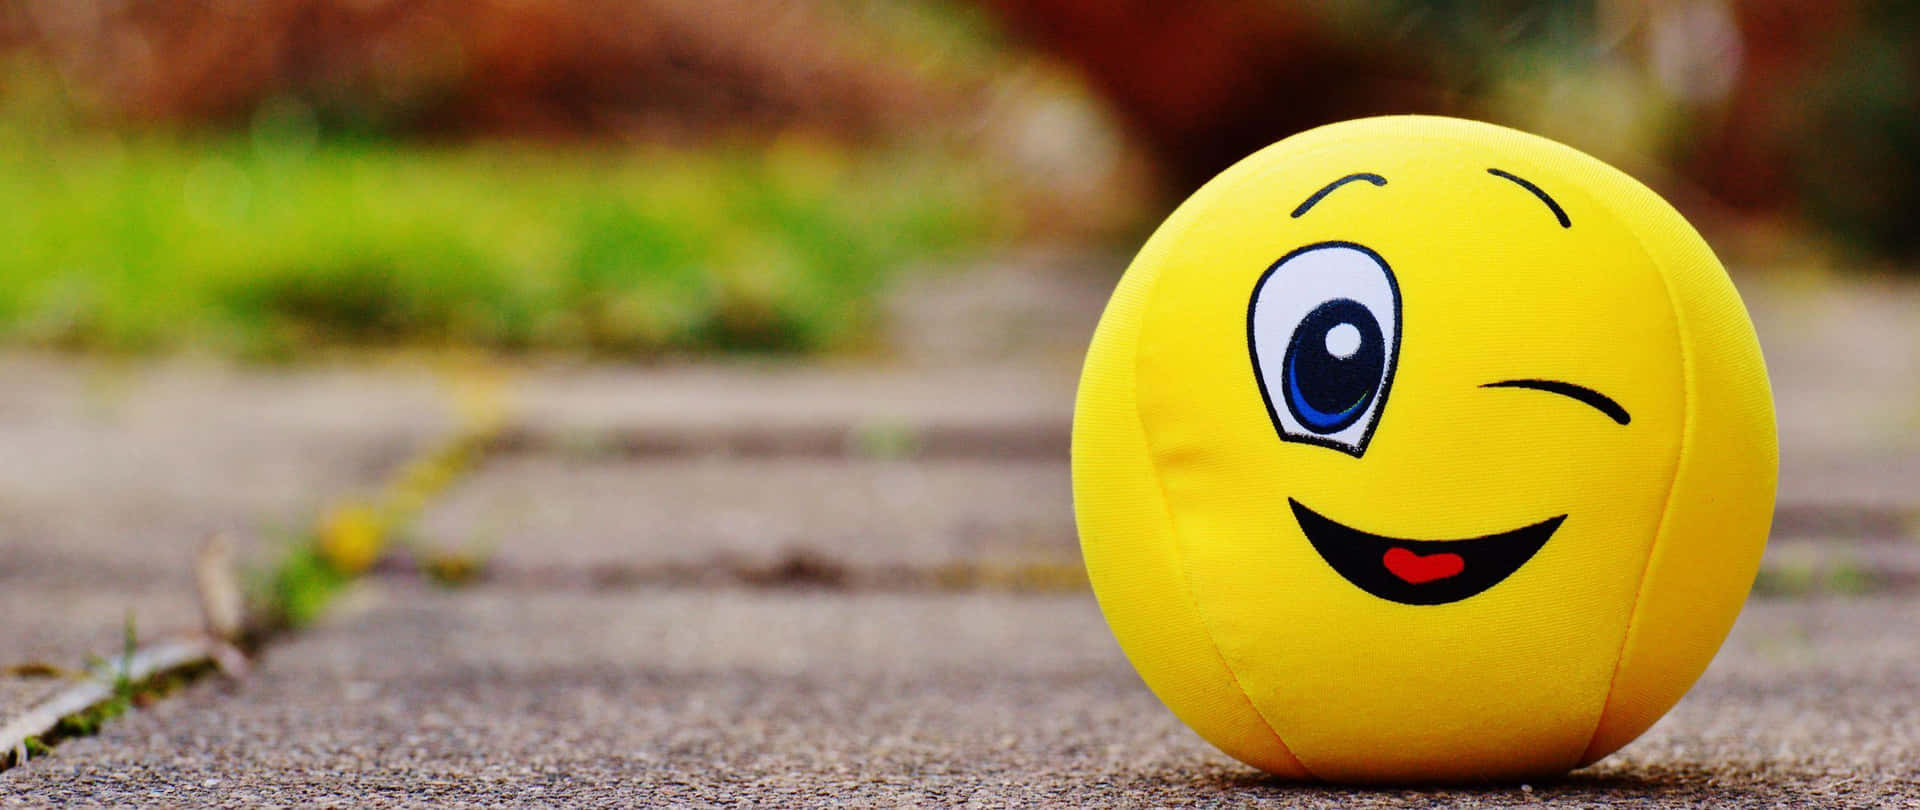 Winking Emoji Ballon Pavement Wallpaper